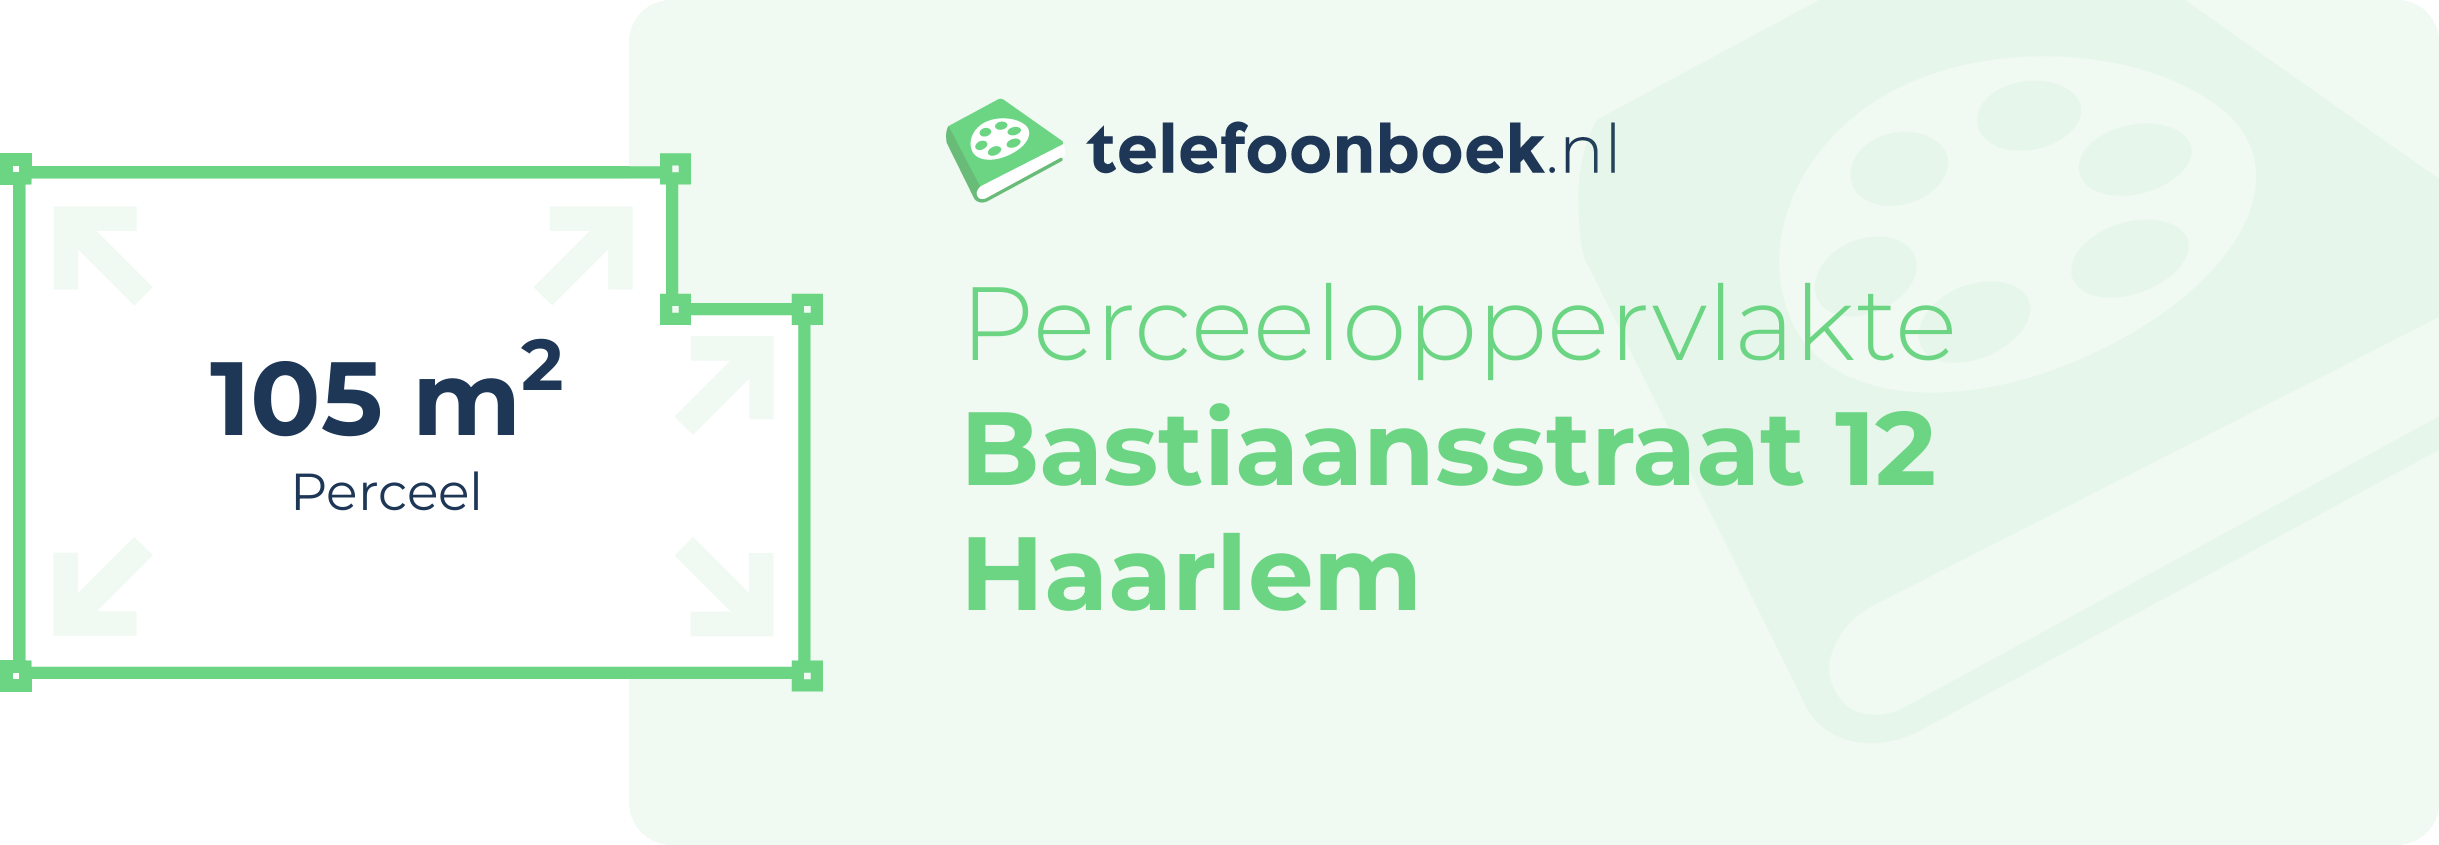 Perceeloppervlakte Bastiaansstraat 12 Haarlem